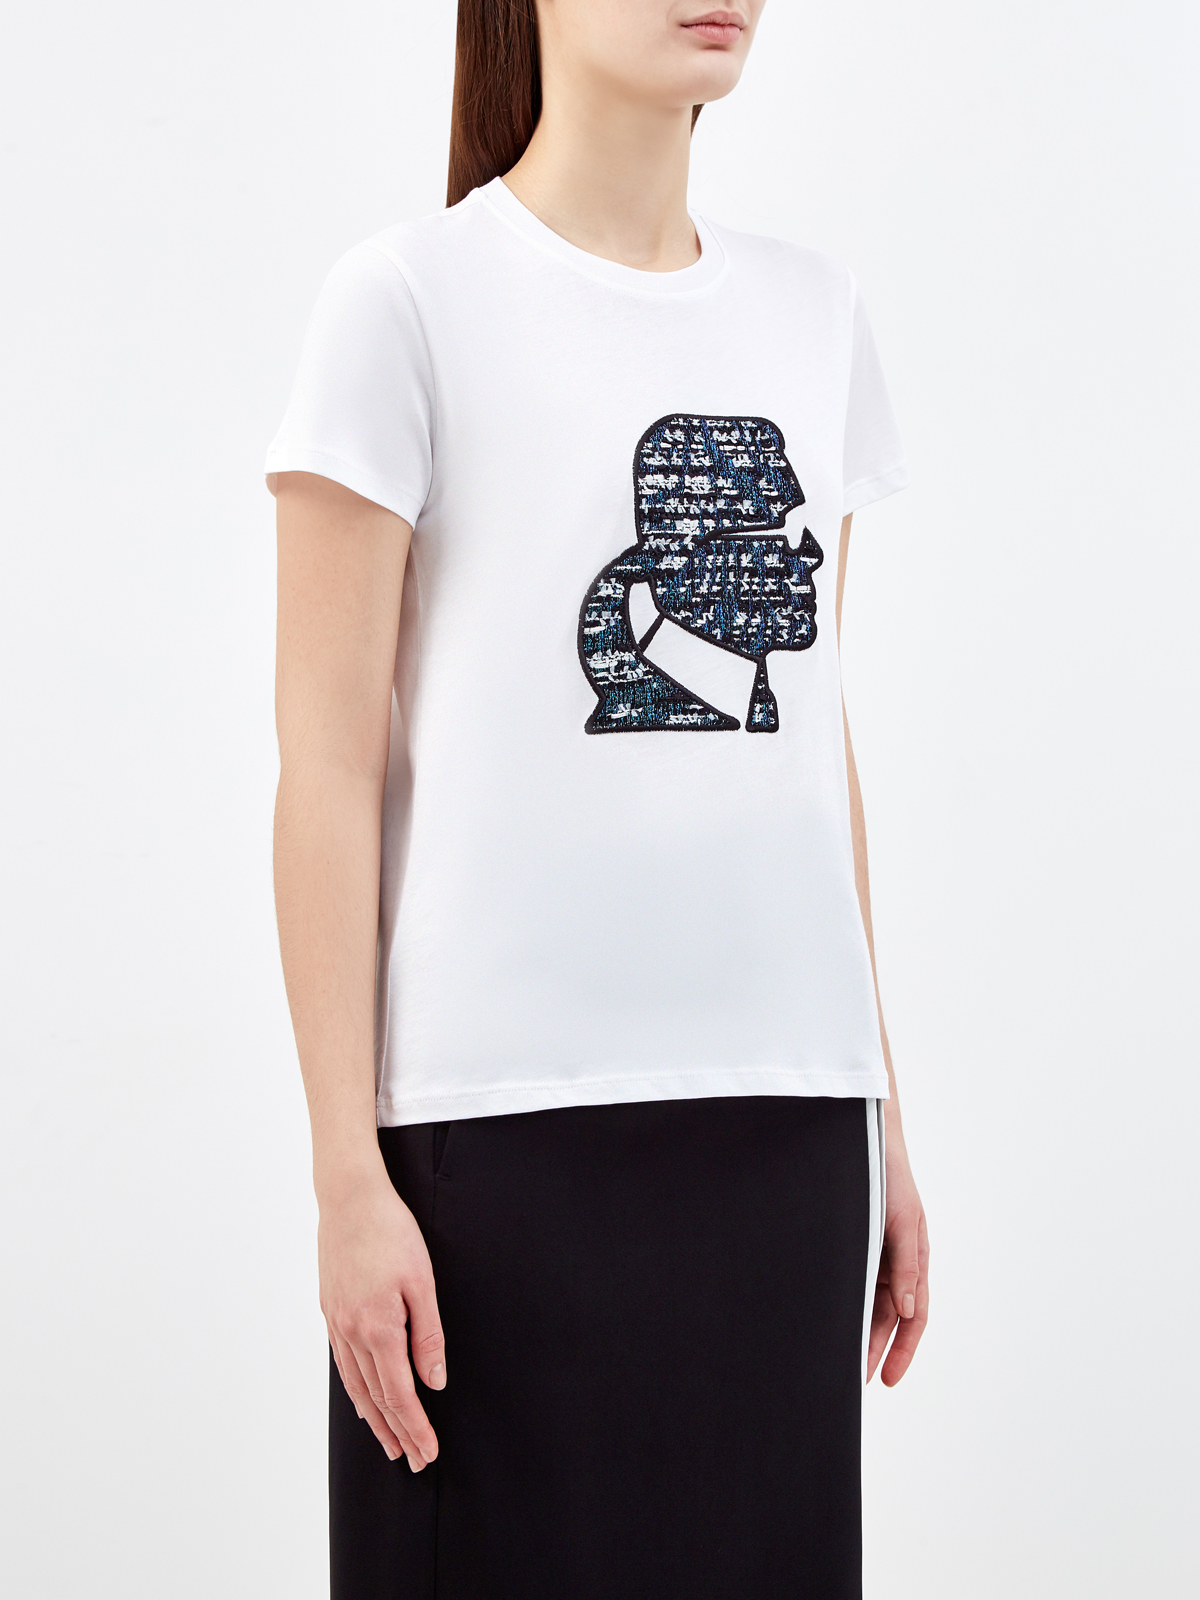 Хлопковая футболка с фактурным декором из букле KARL LAGERFELD, цвет белый, размер XS;S;M;L;XL - фото 3